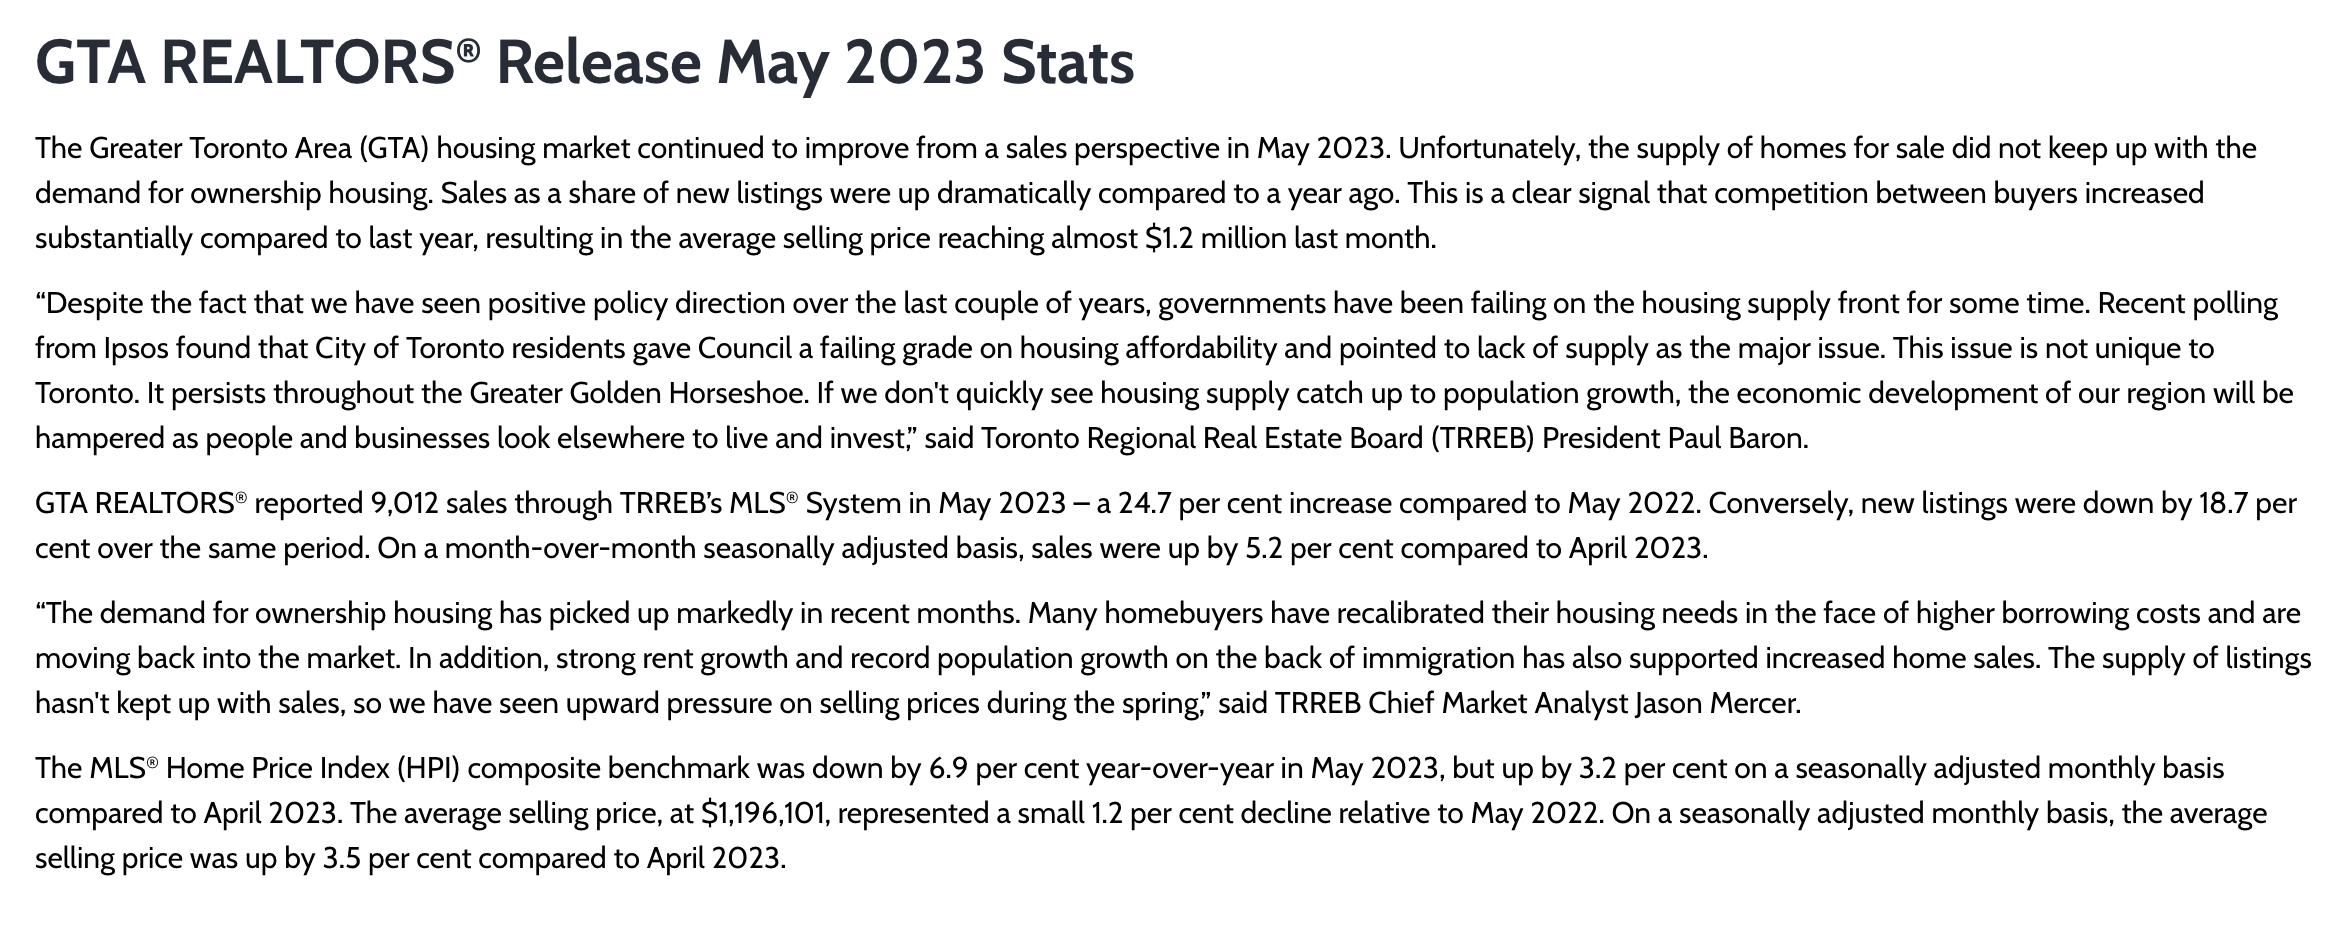 From Toronto Regional Real Estate Board